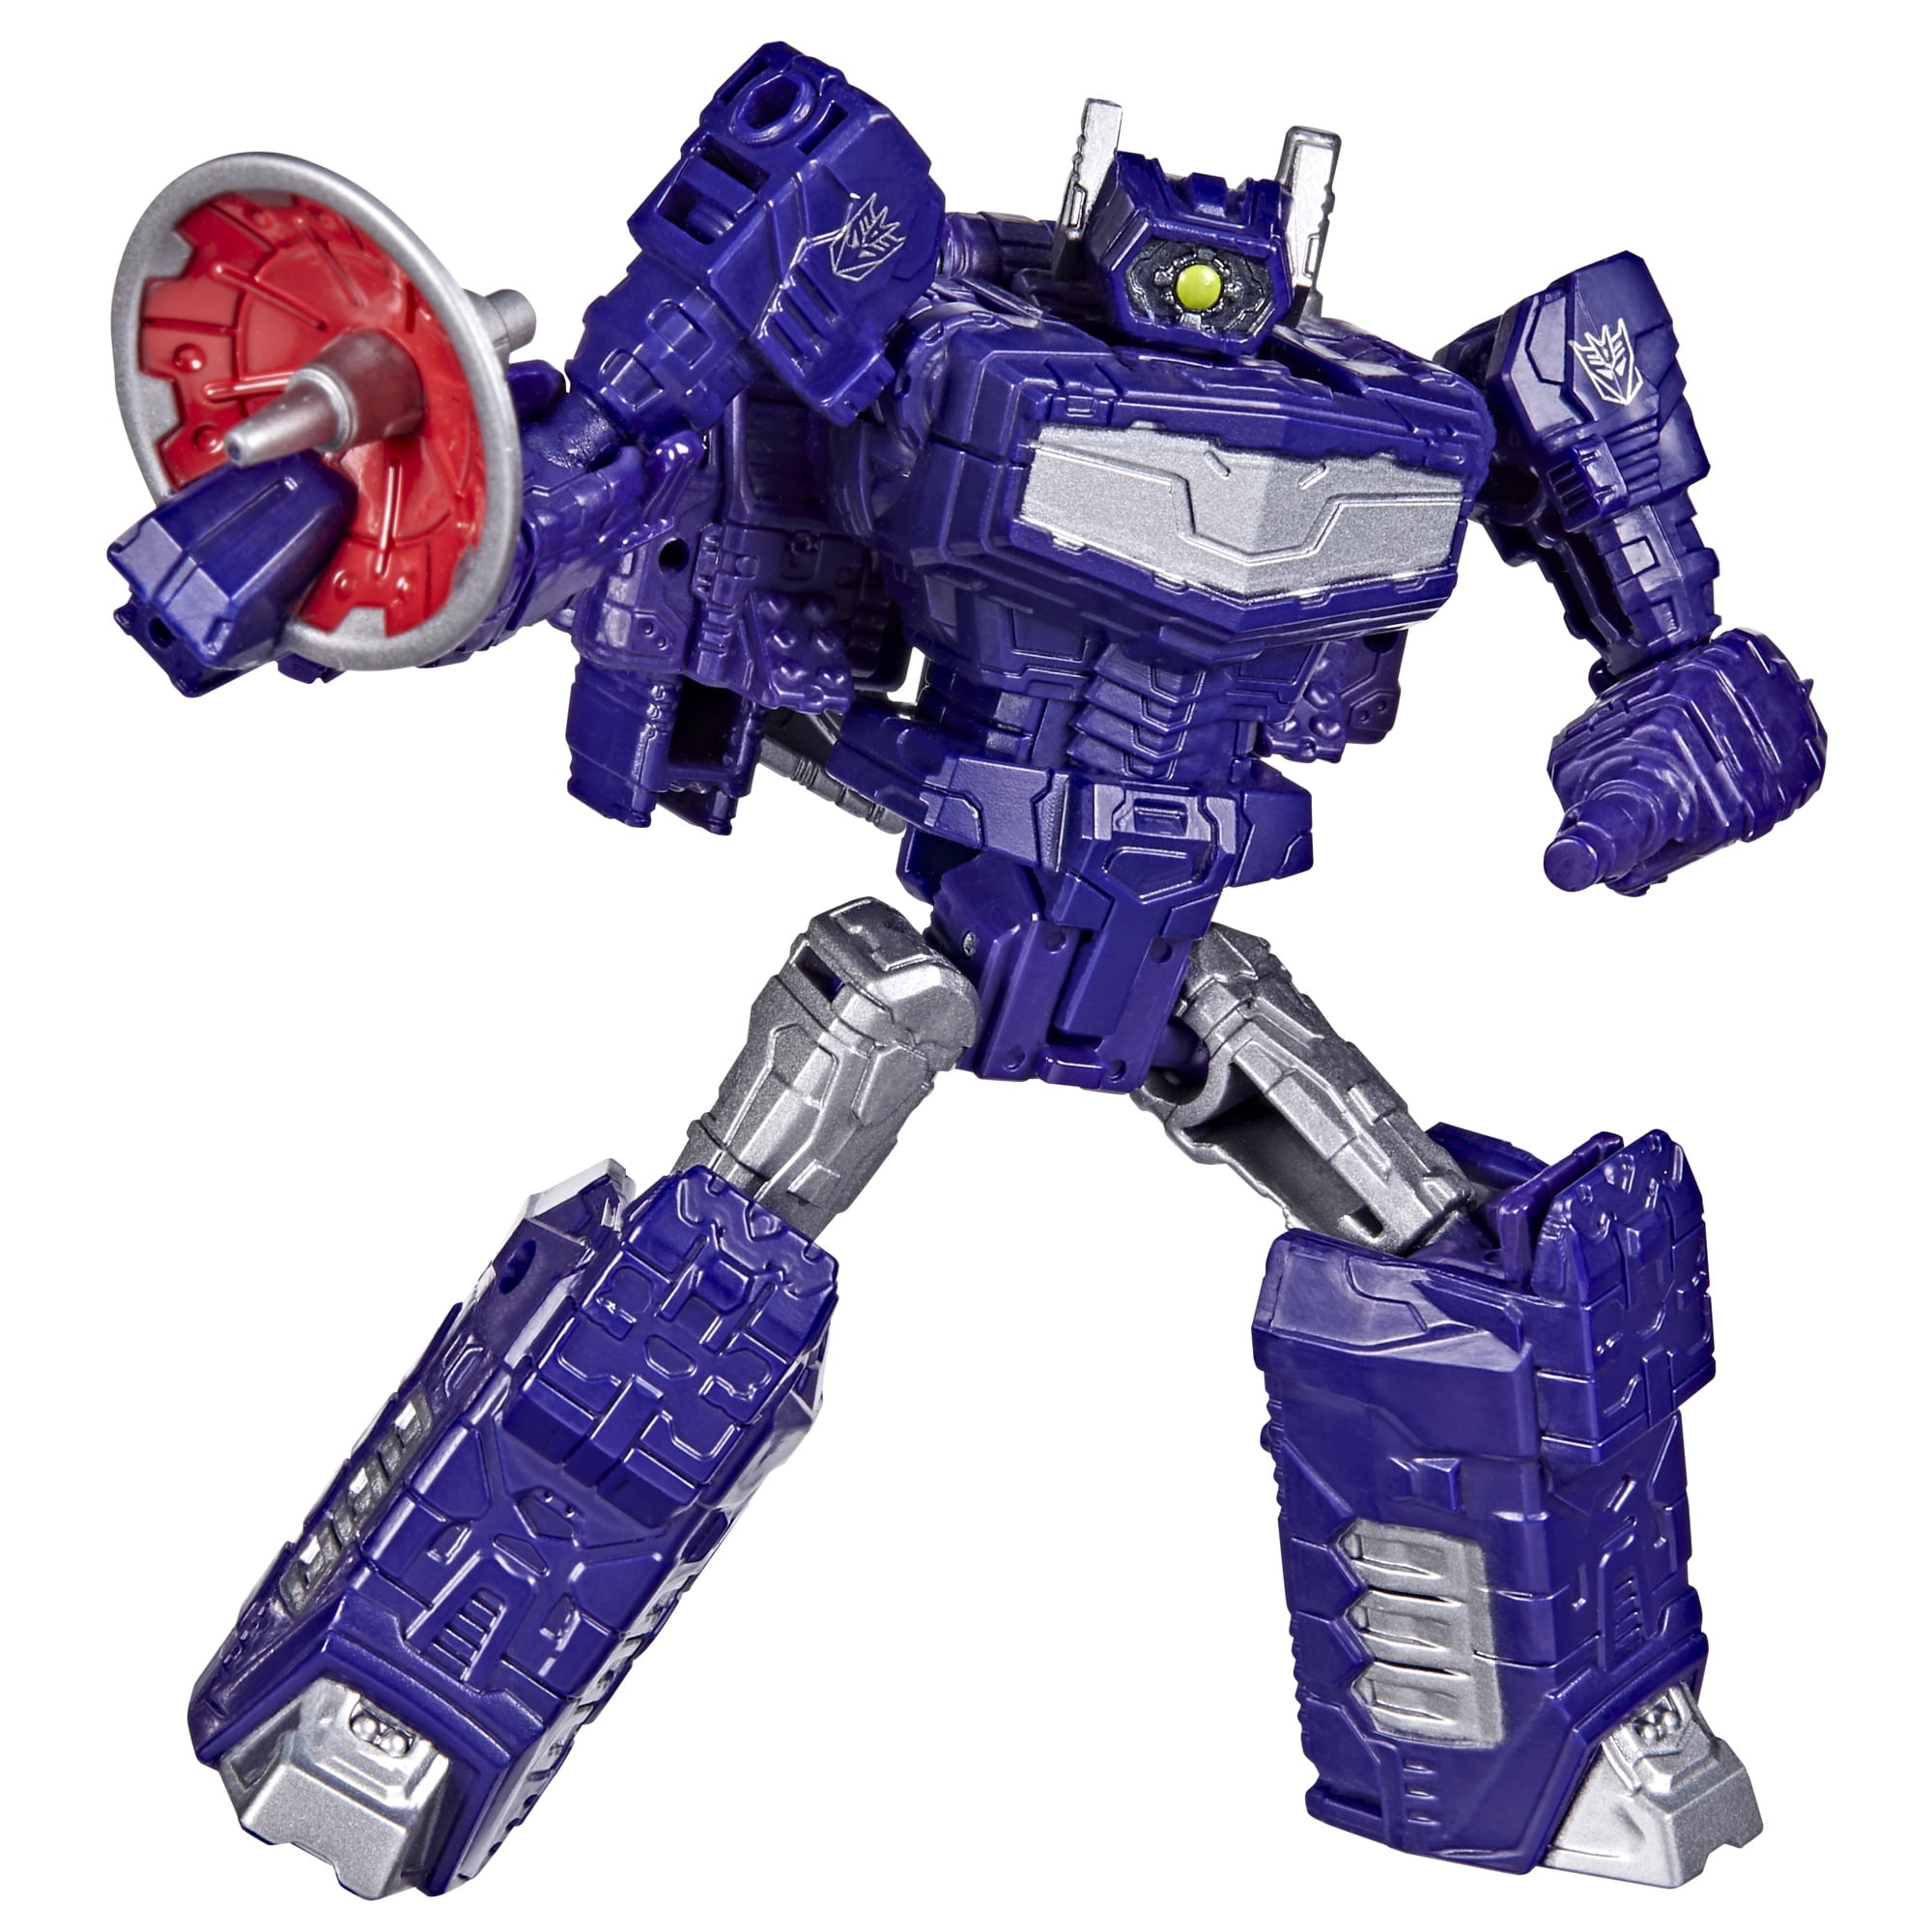 Transformers Generations Cyber Battalion Class Shockwave Figure for sale online 